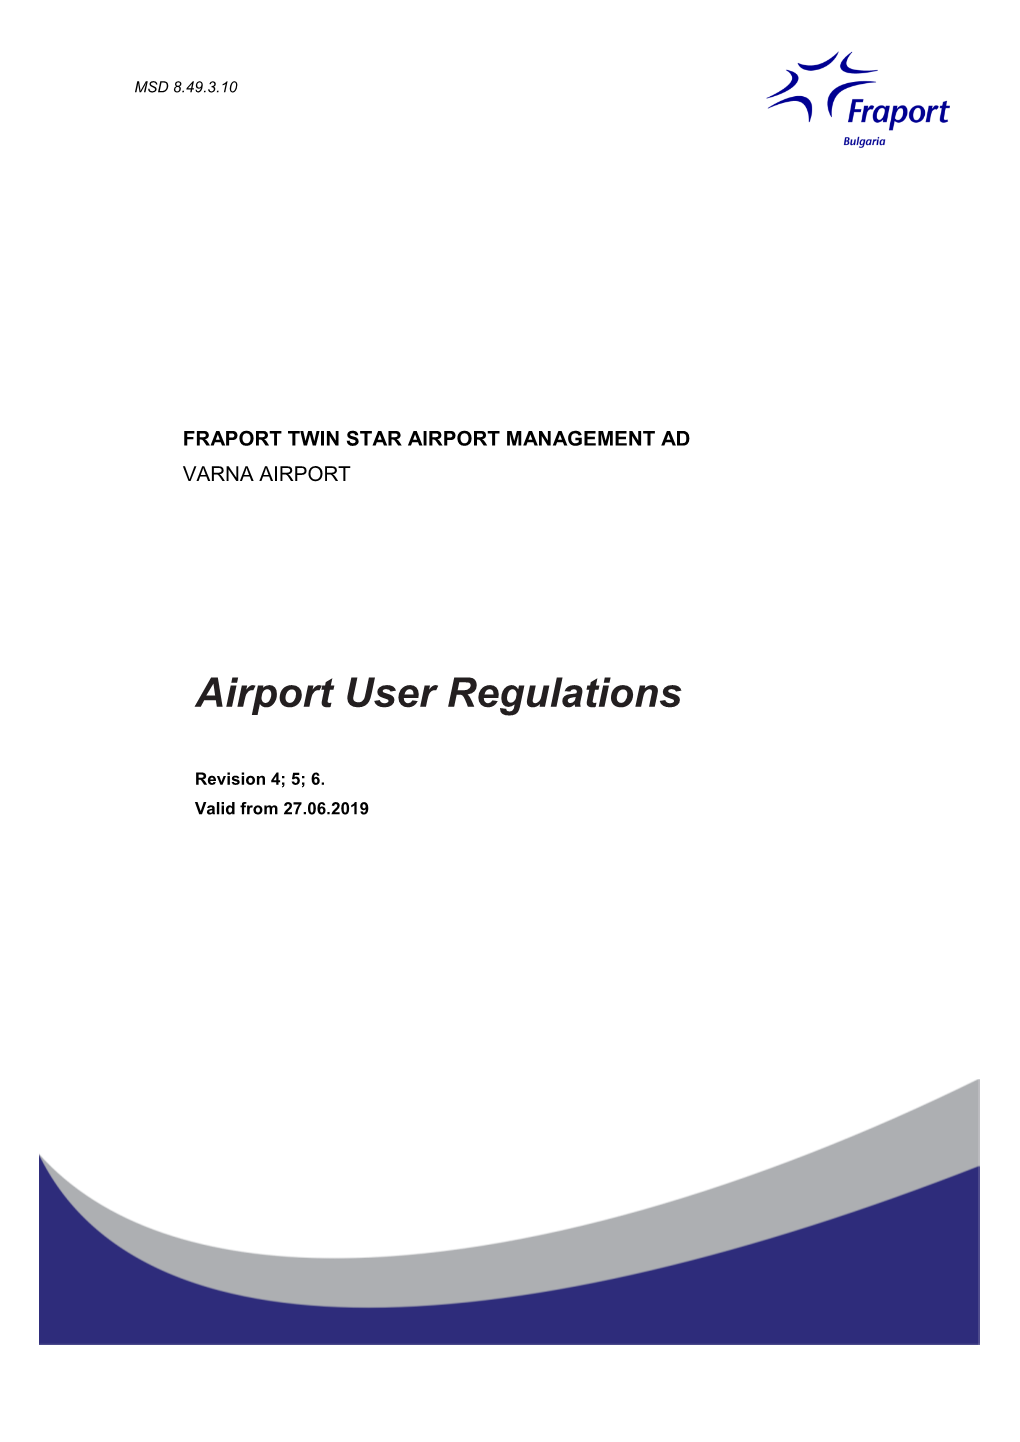 Airport User Regulations